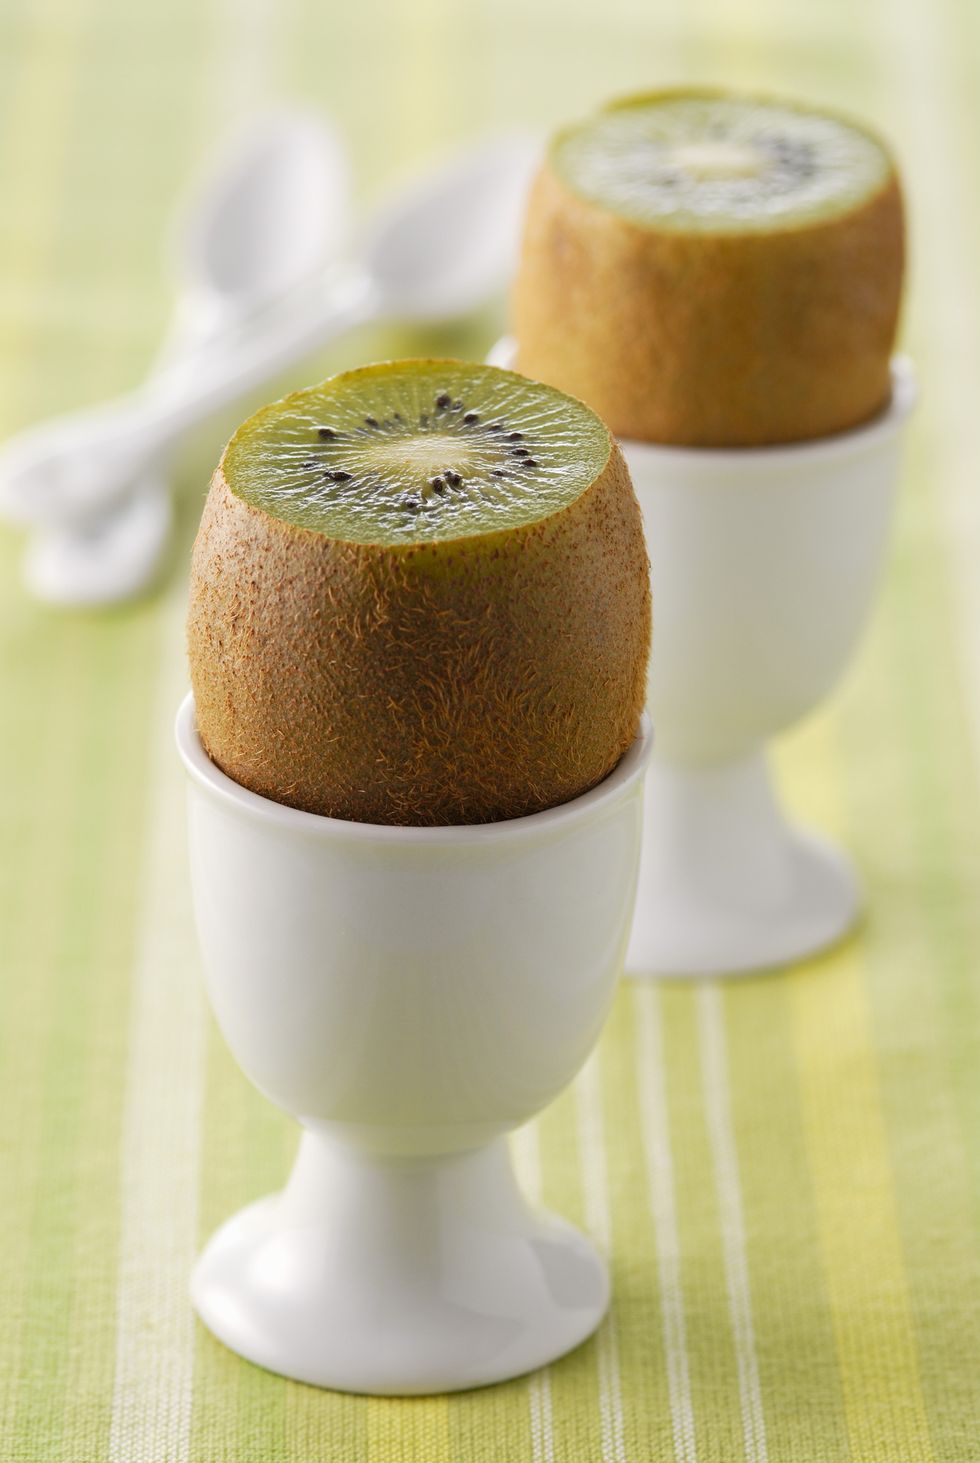 White egg cup holding a kiwi fruit